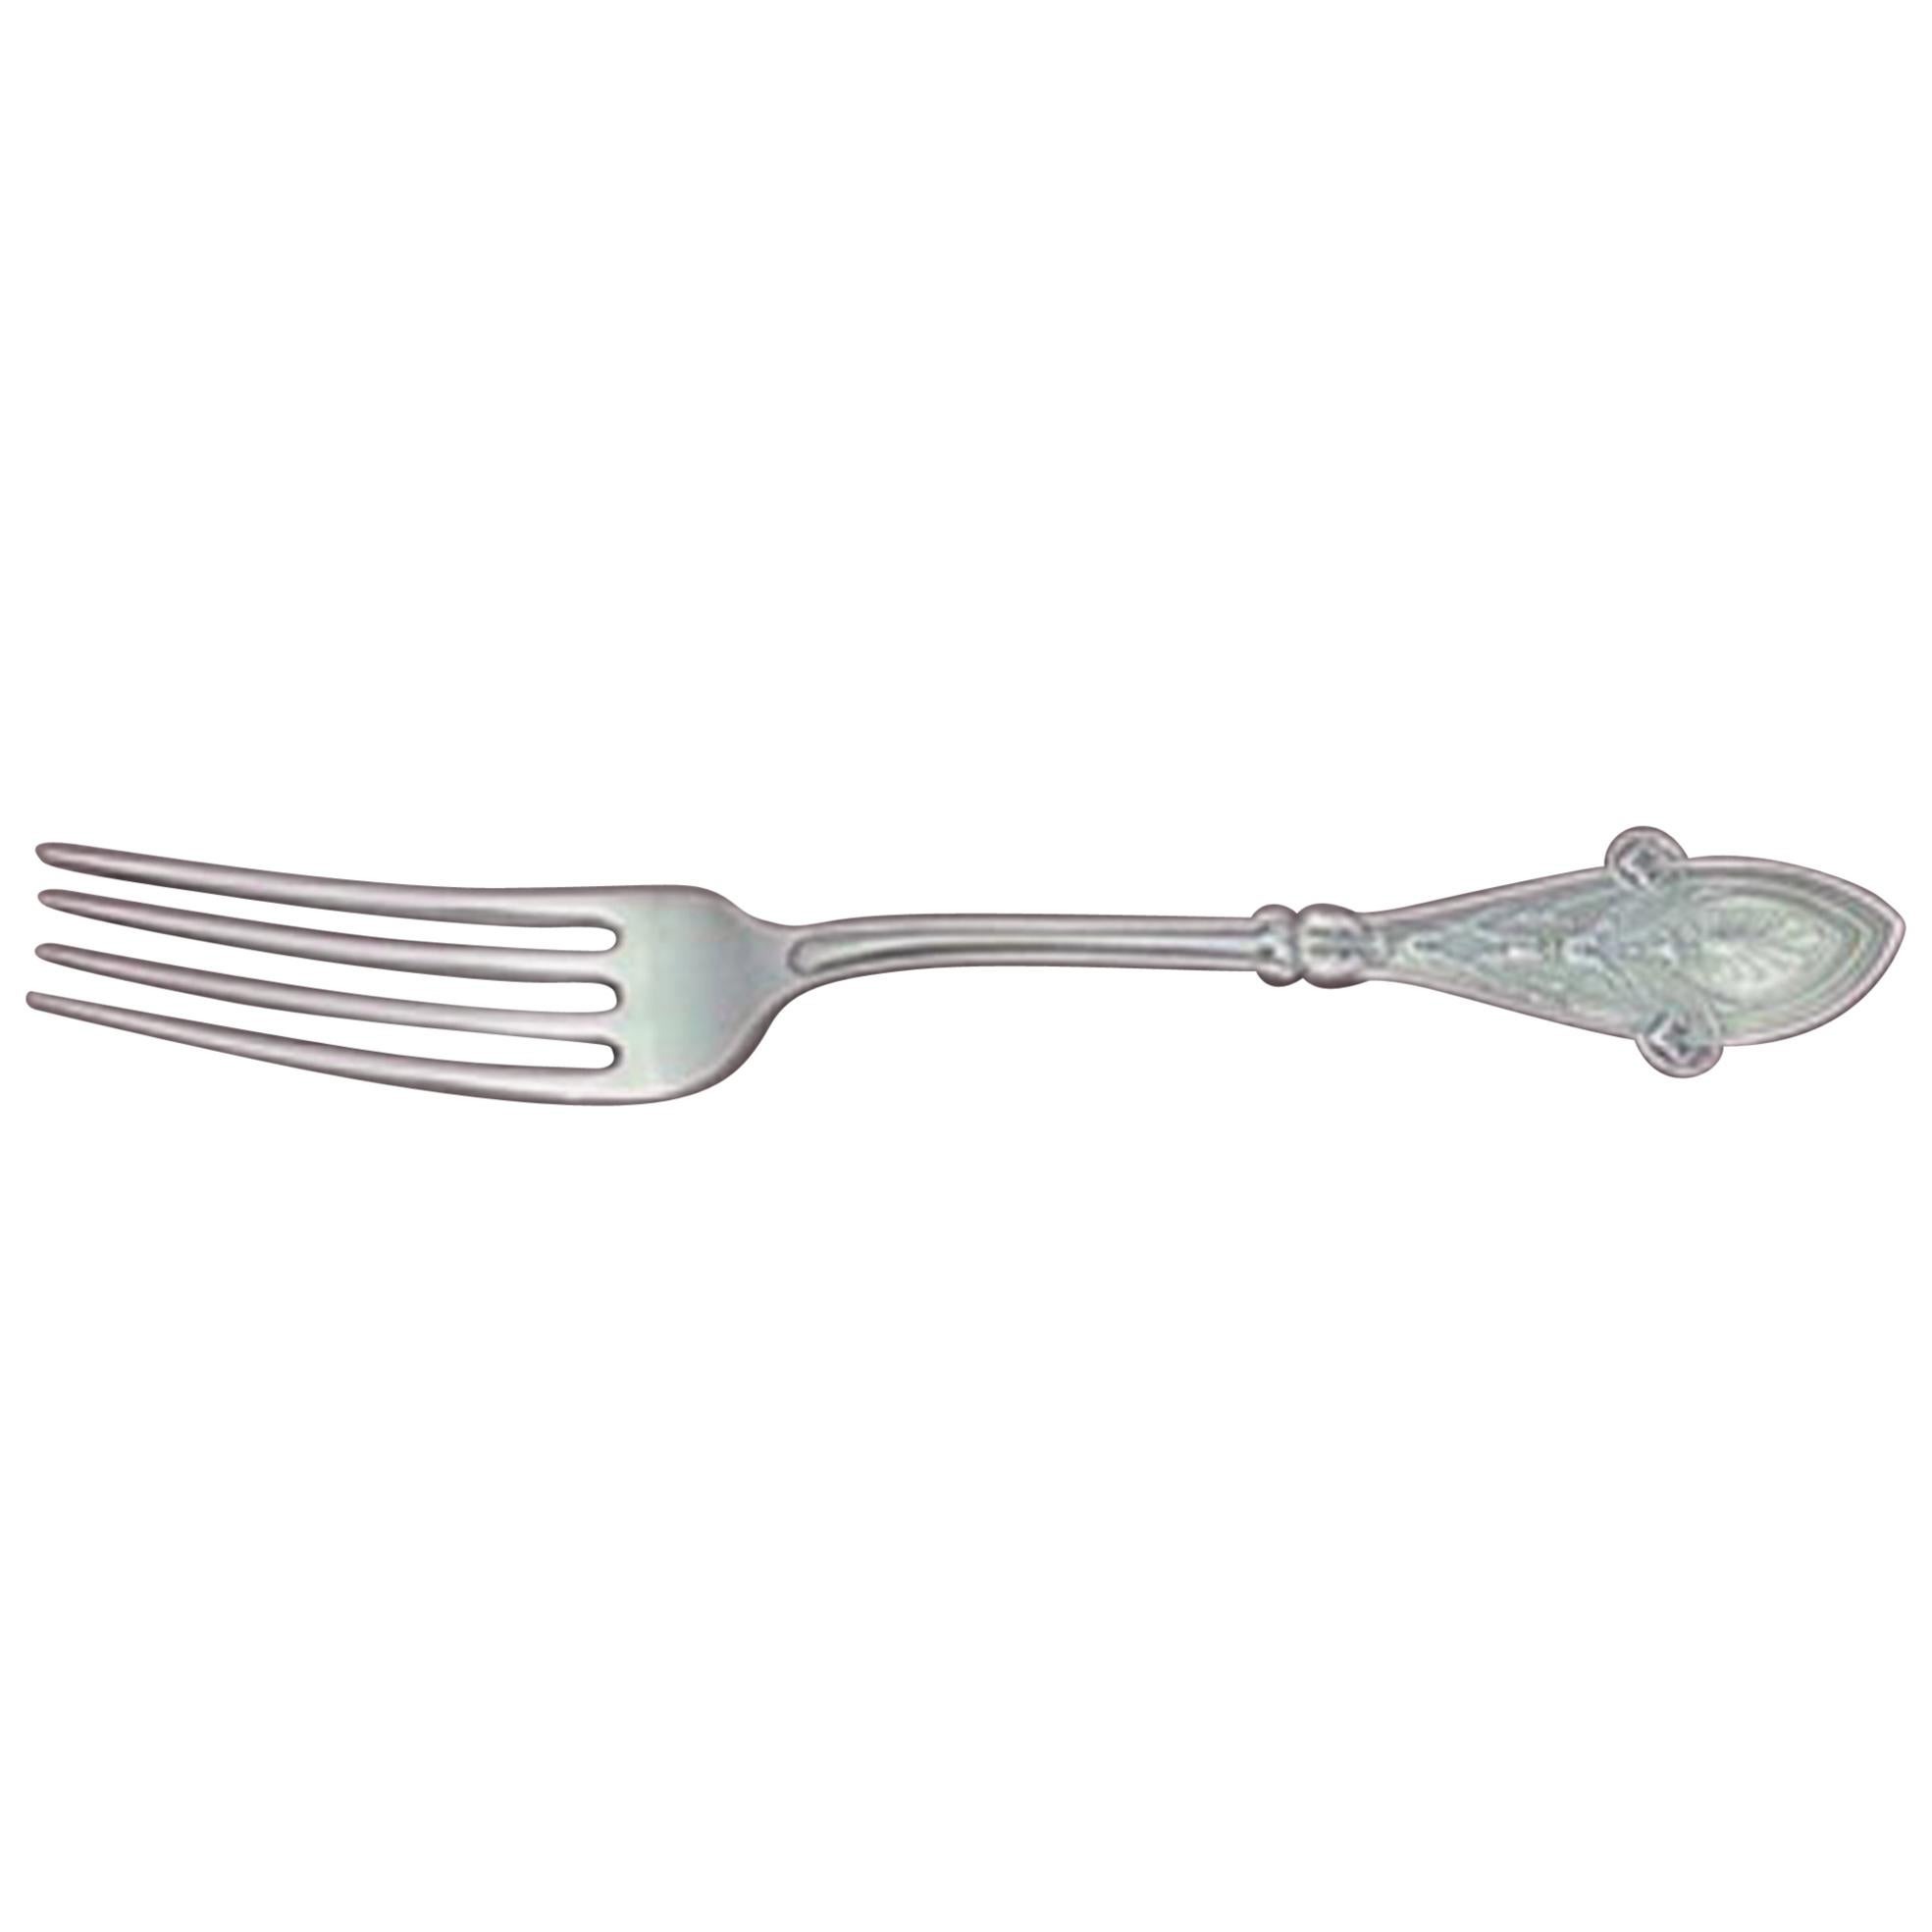 Italian by Tiffany & Co. Sterling Silver Dinner Fork